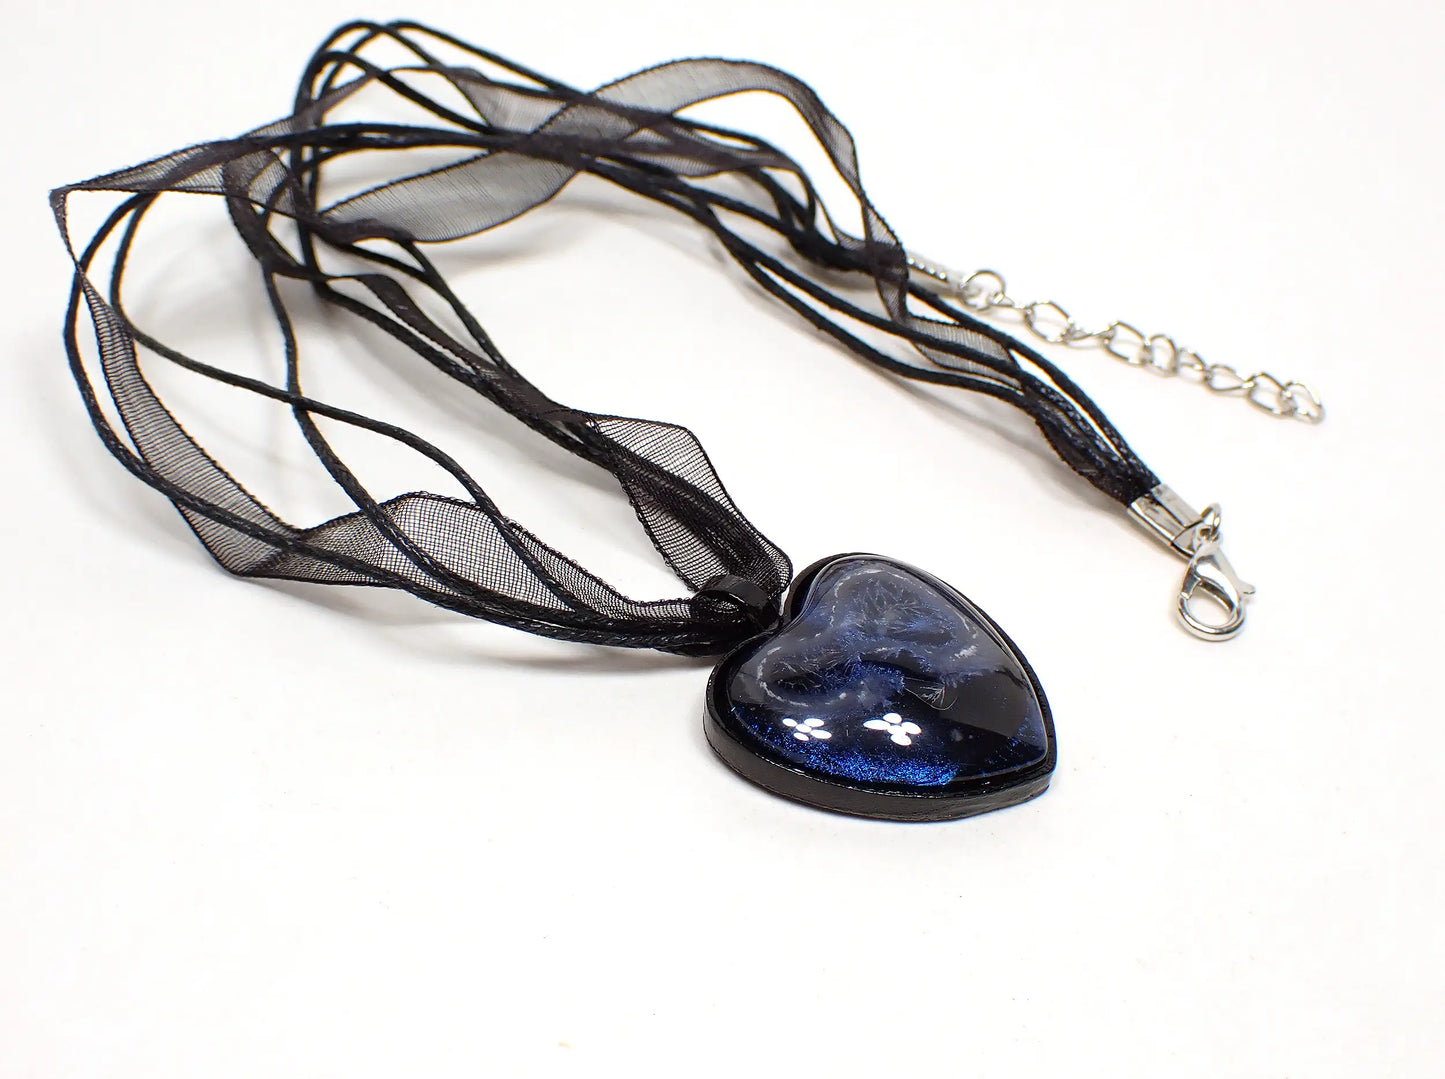 Handmade "Cold Hearted" Black Heart Pendant Necklace, Iridescent Blue Frost Resin, Biker Rocker Emo Goth